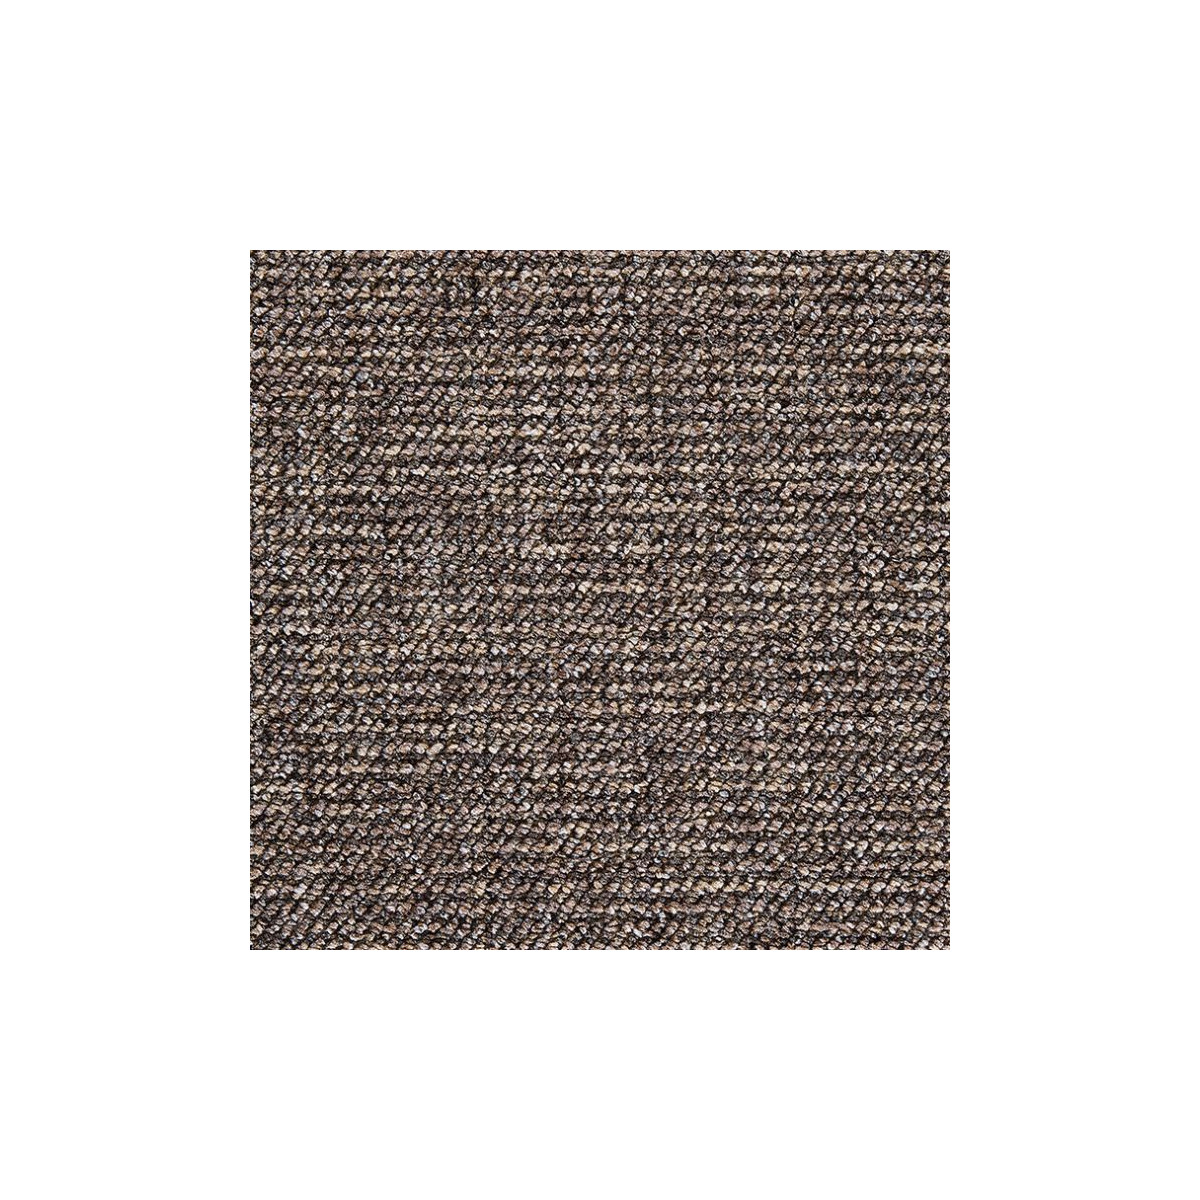 Metrážový koberec Manhattan 7647